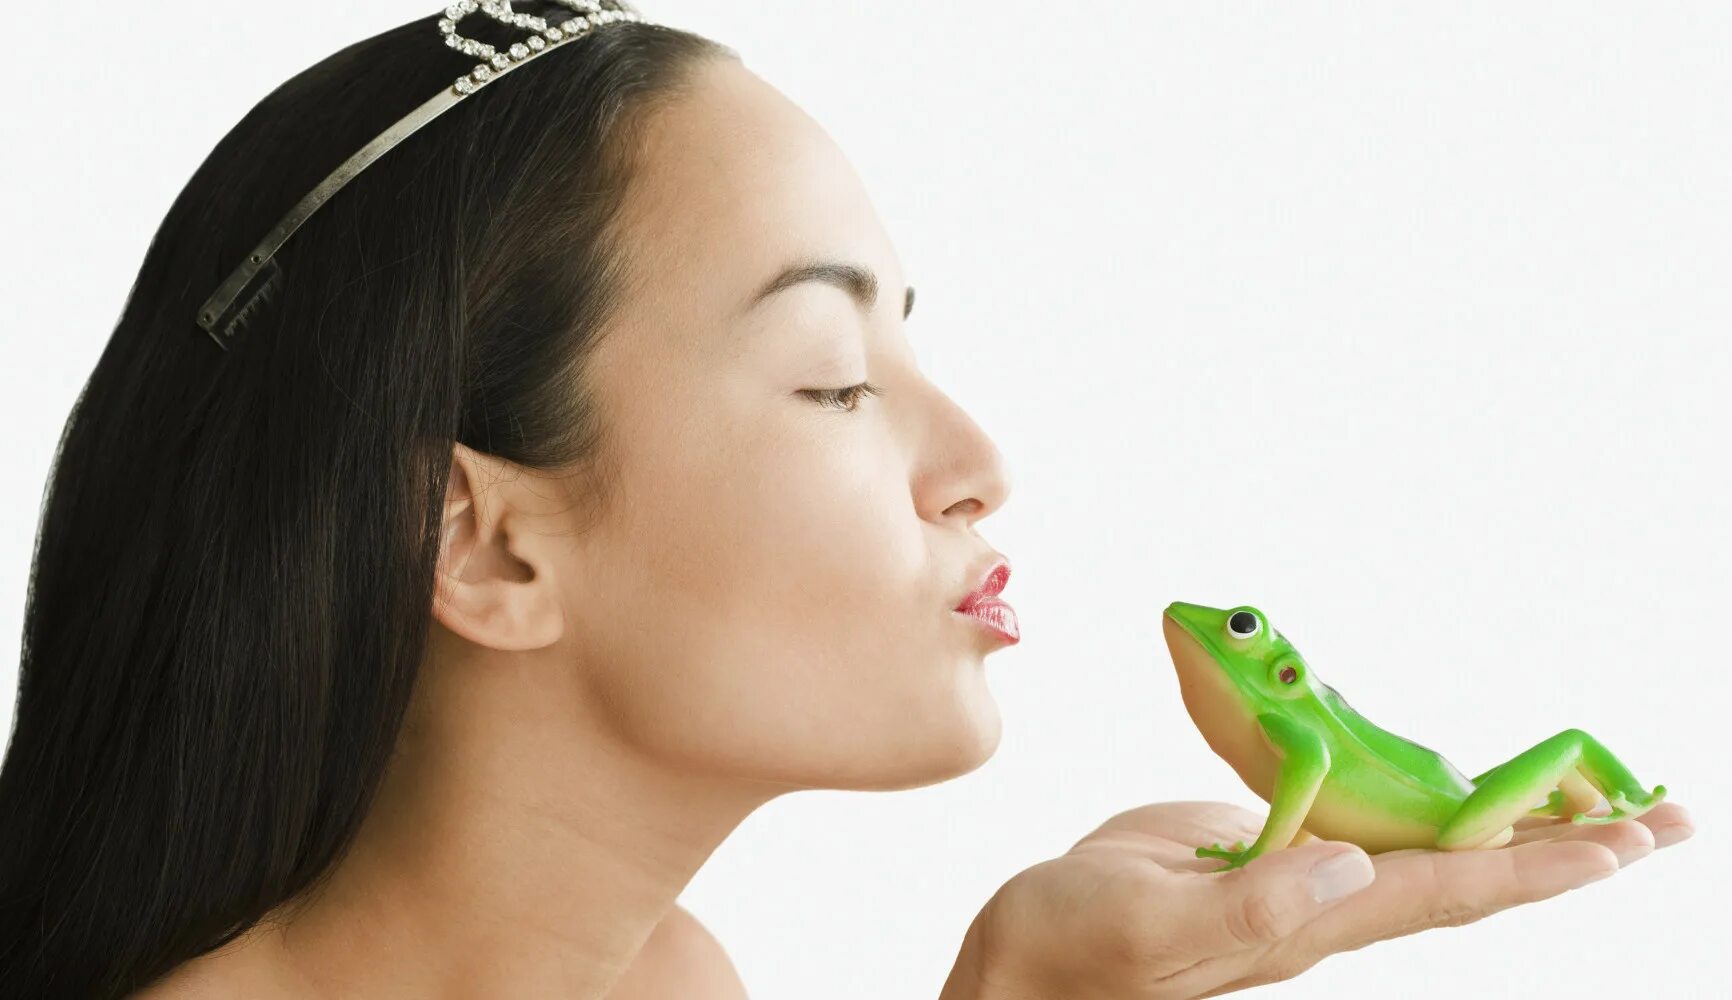 Pleasure up. Принцесса целует лягушку. Девушка поцеловала лягушку. Принцесса целует лягушку фото. Девочка целует лягушку игрушка.